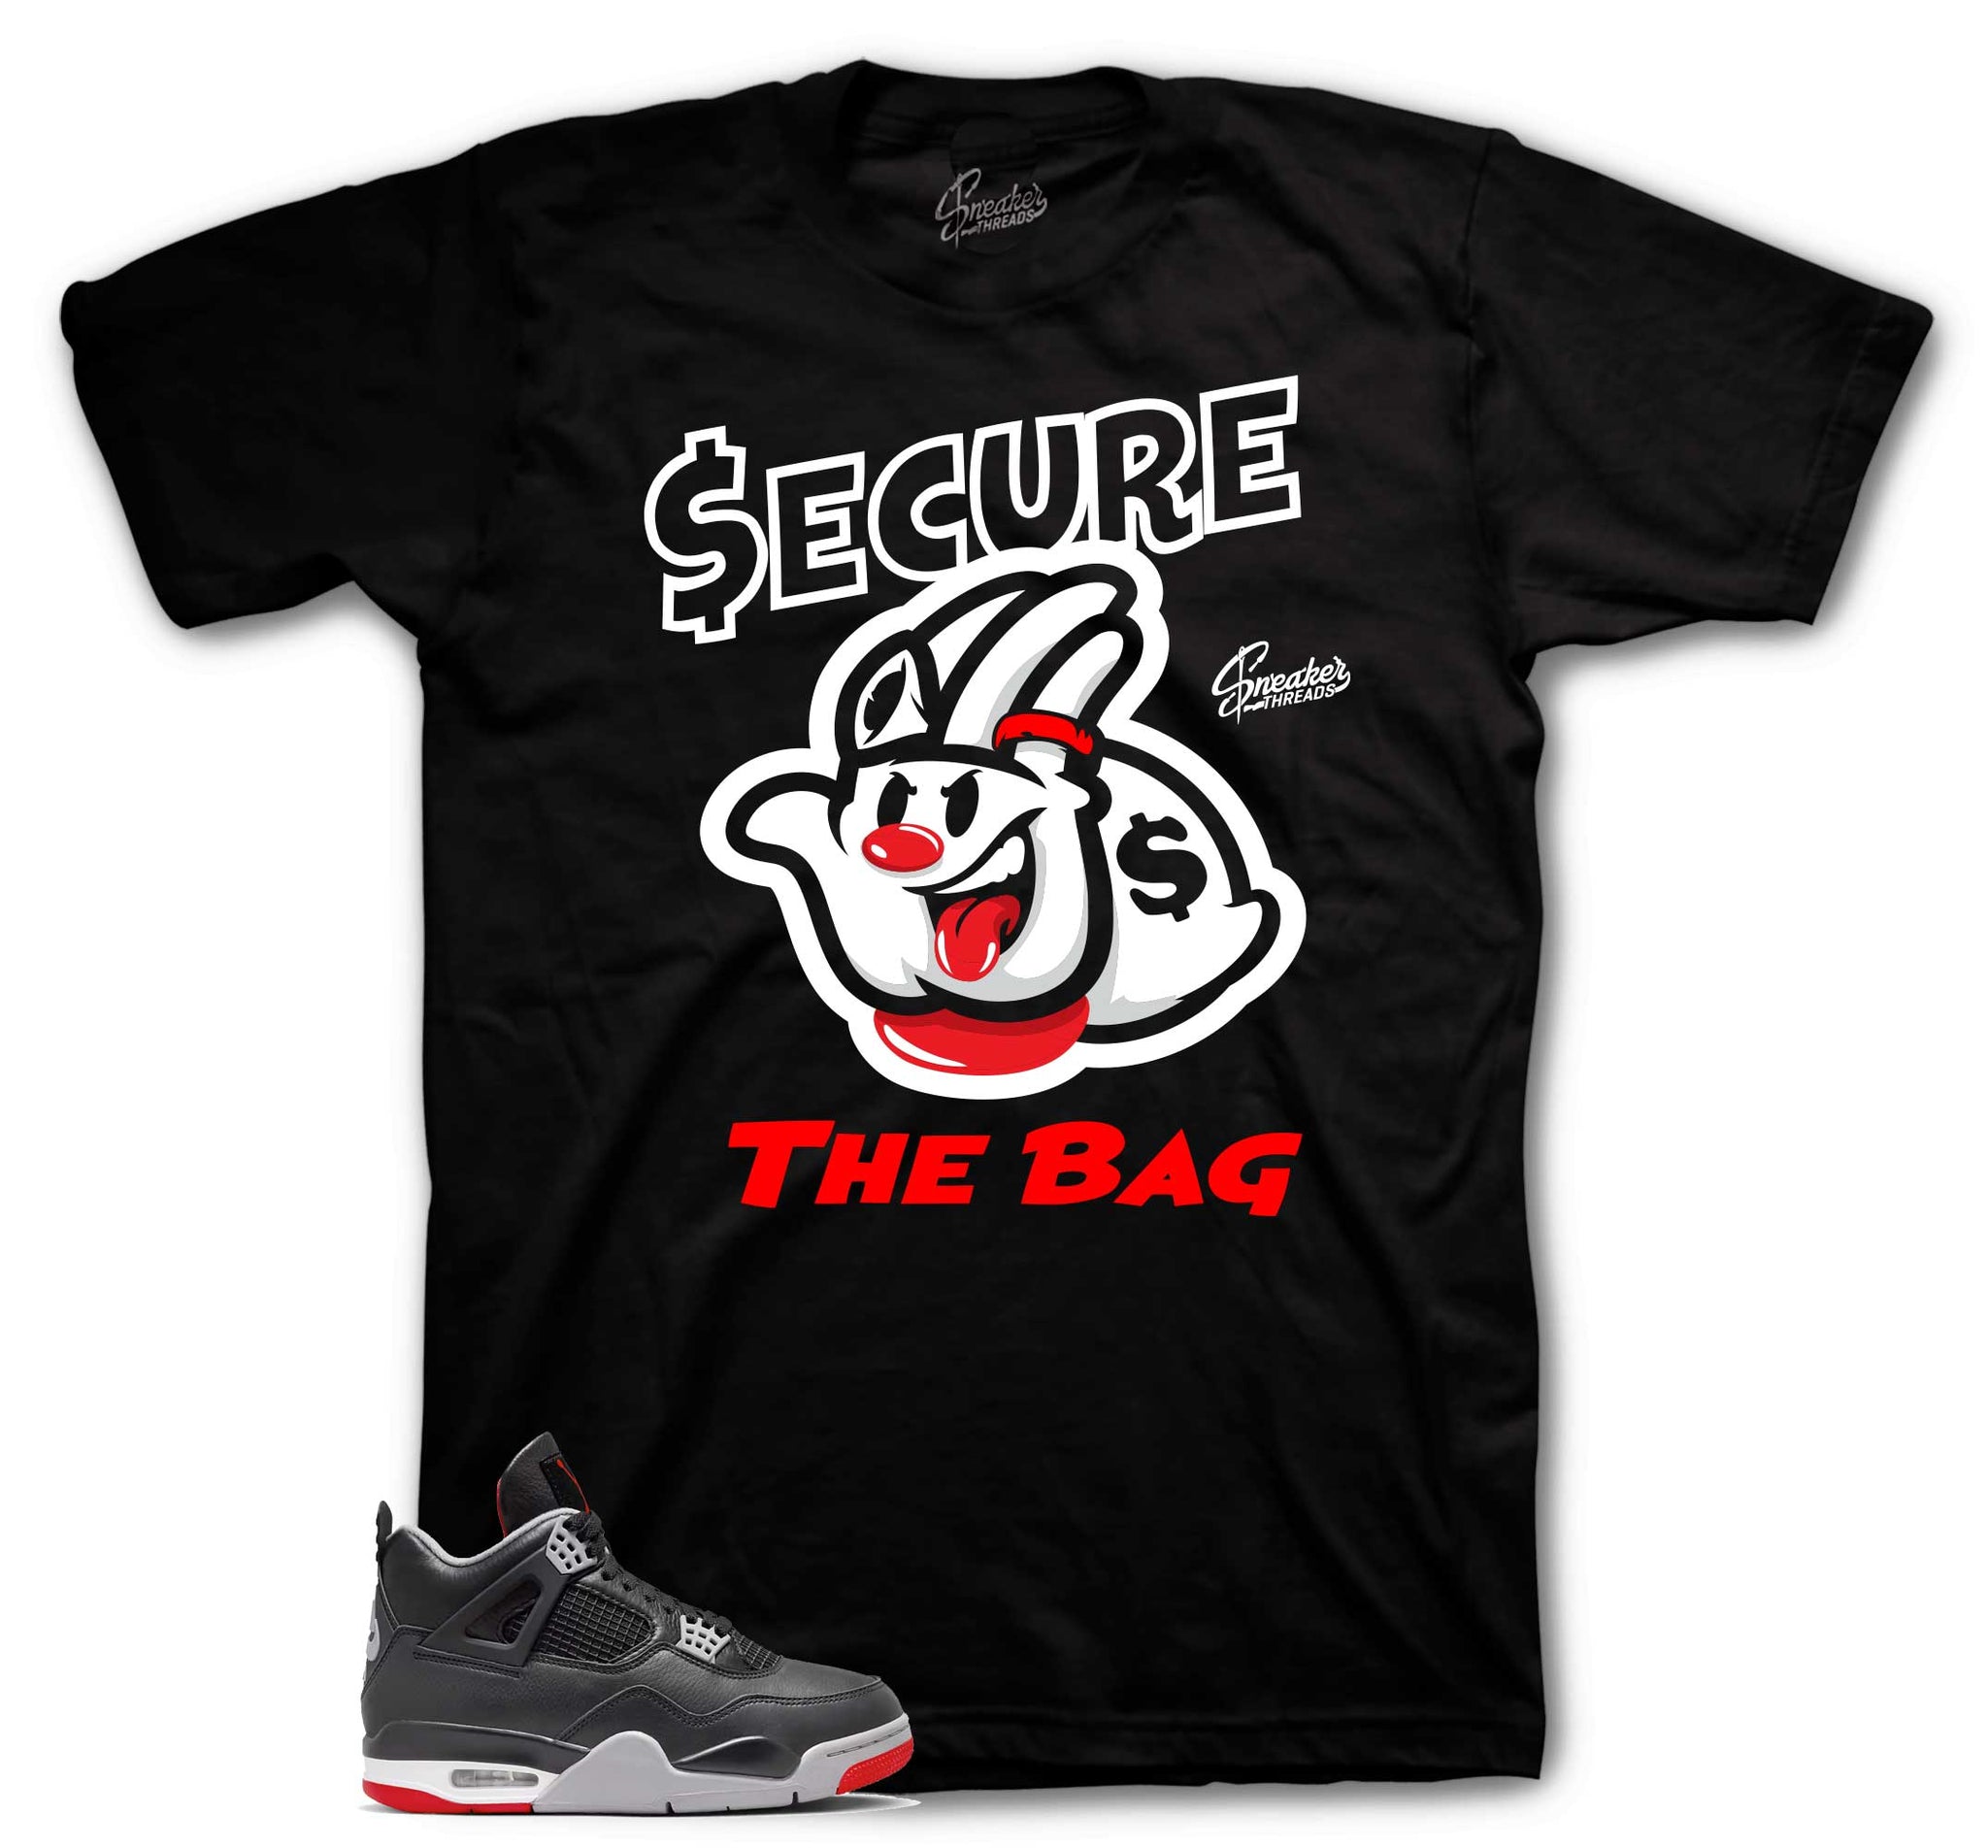 Retro 4 Bred Shirt - Secure The Bag - Black